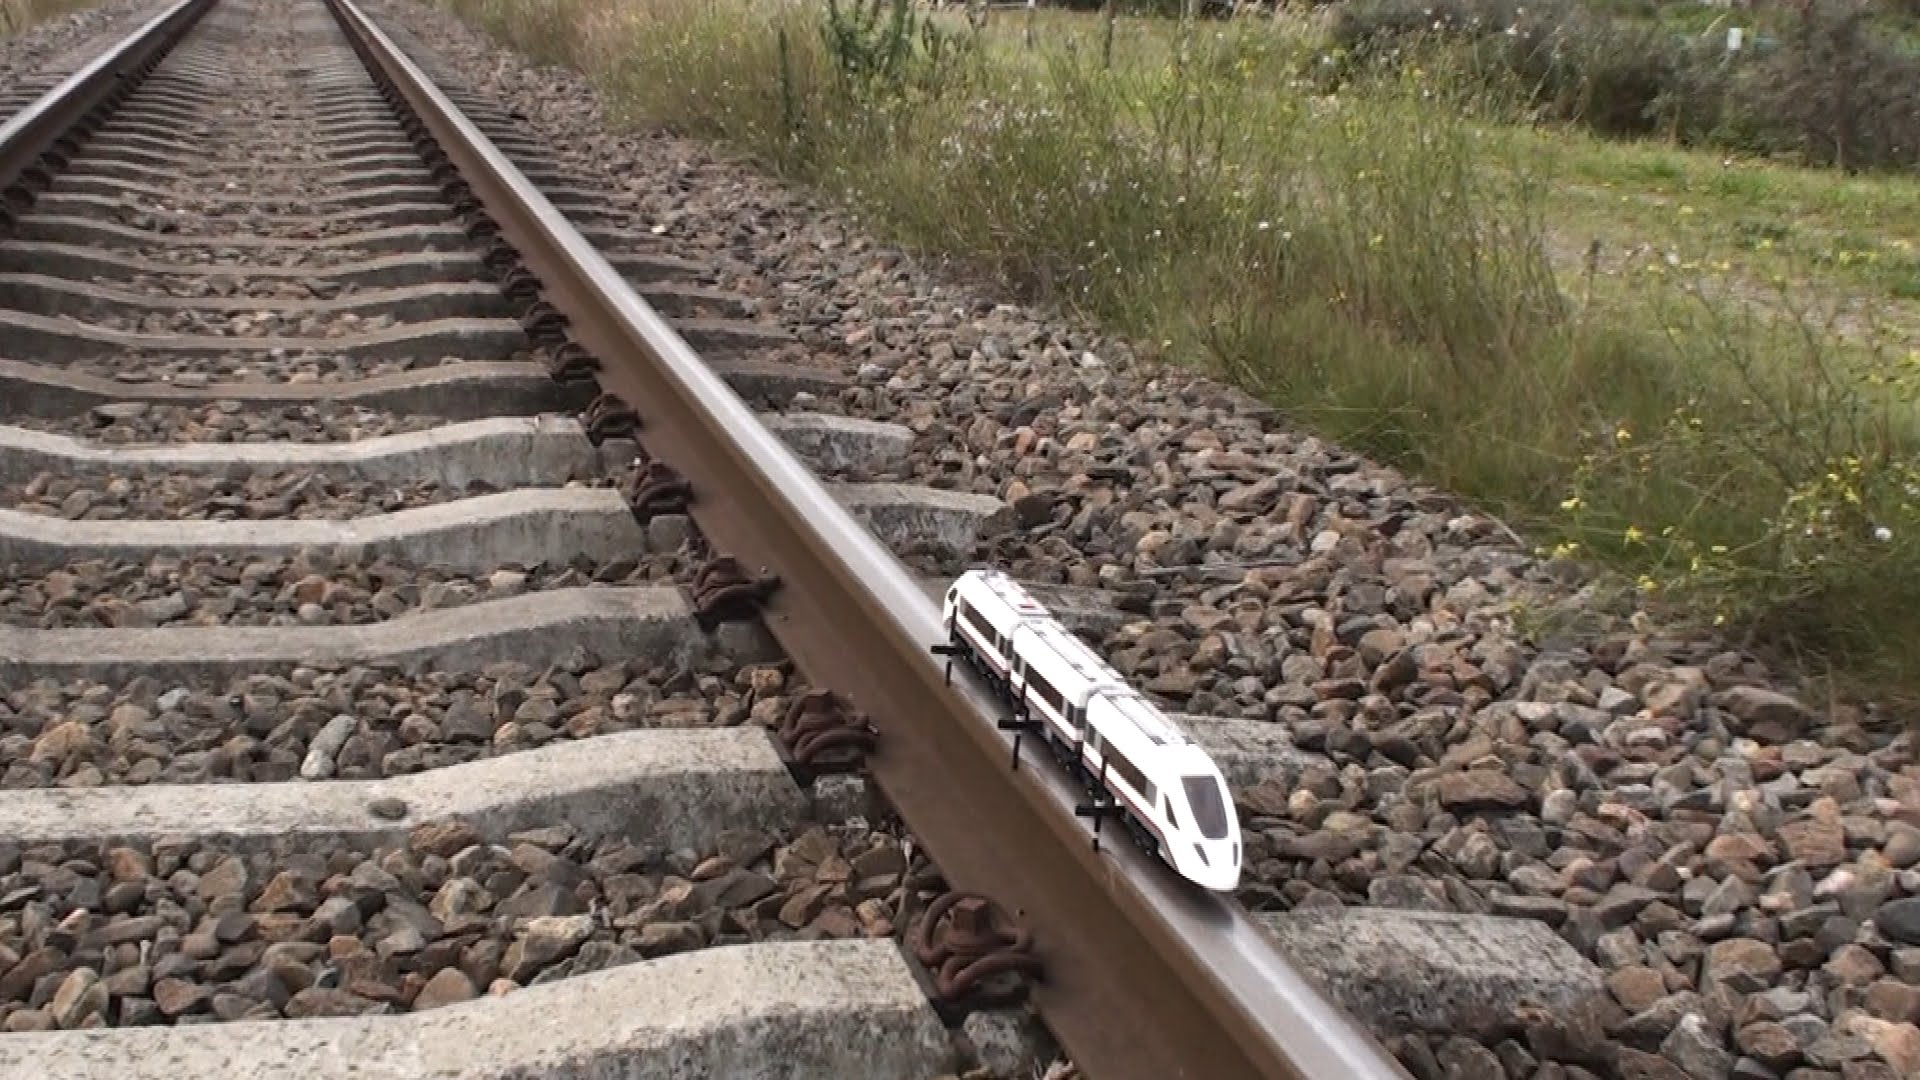 Lego train 60051 on real train tracks - YouTube